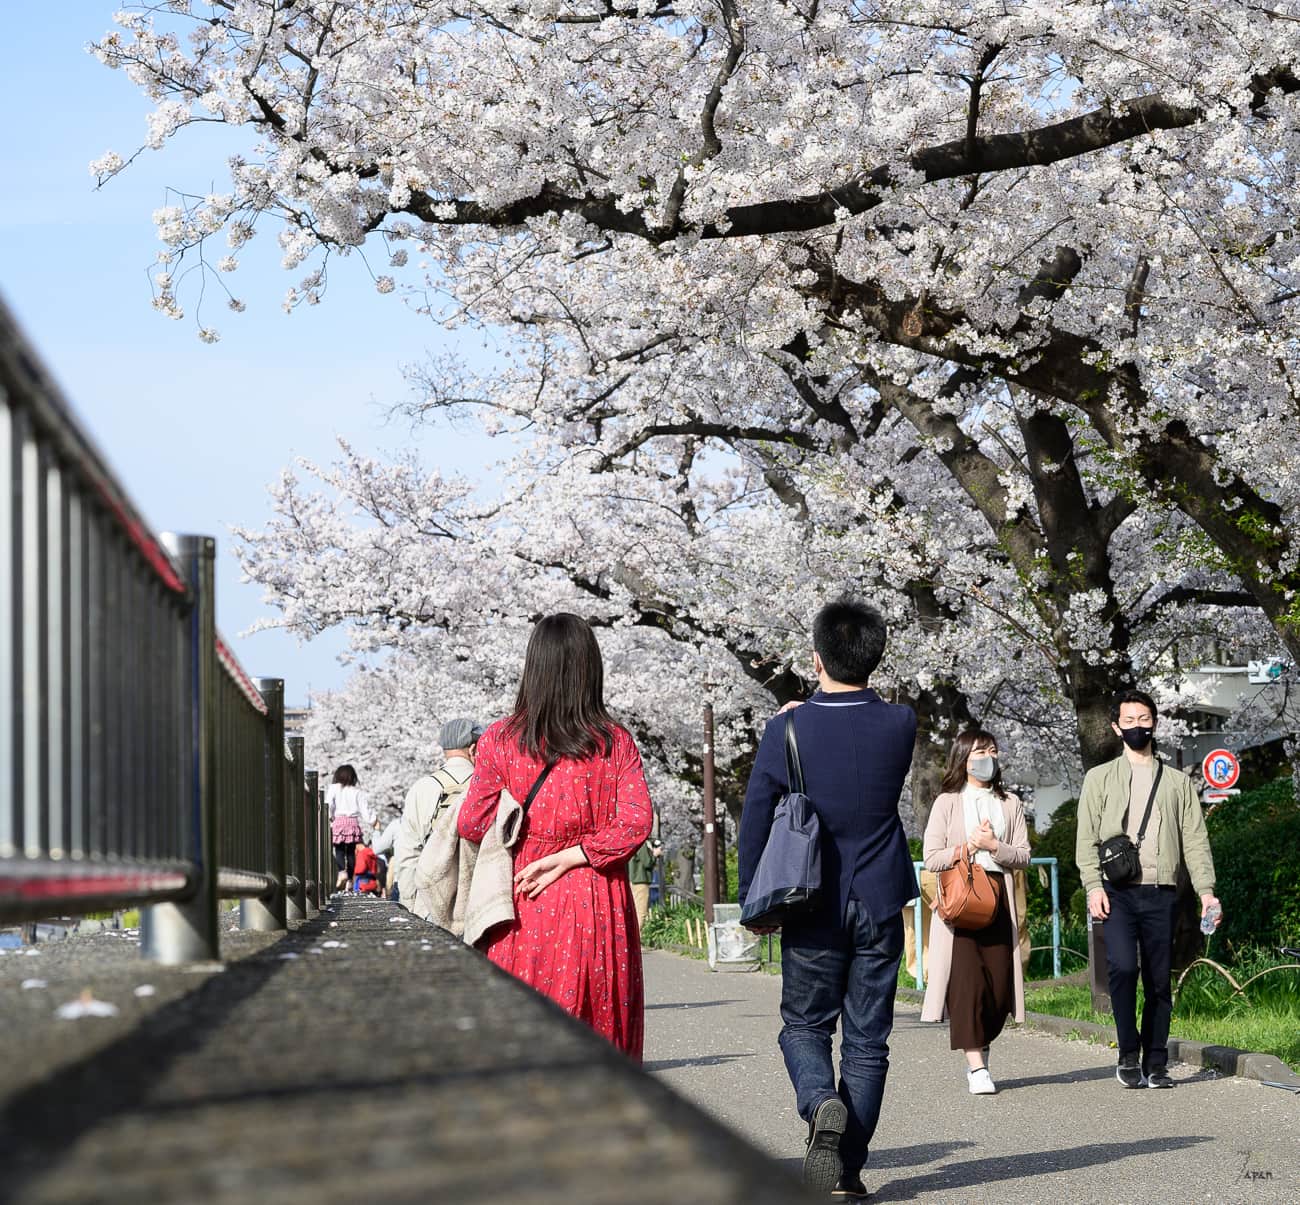 Walk along a river lined with sakura trees